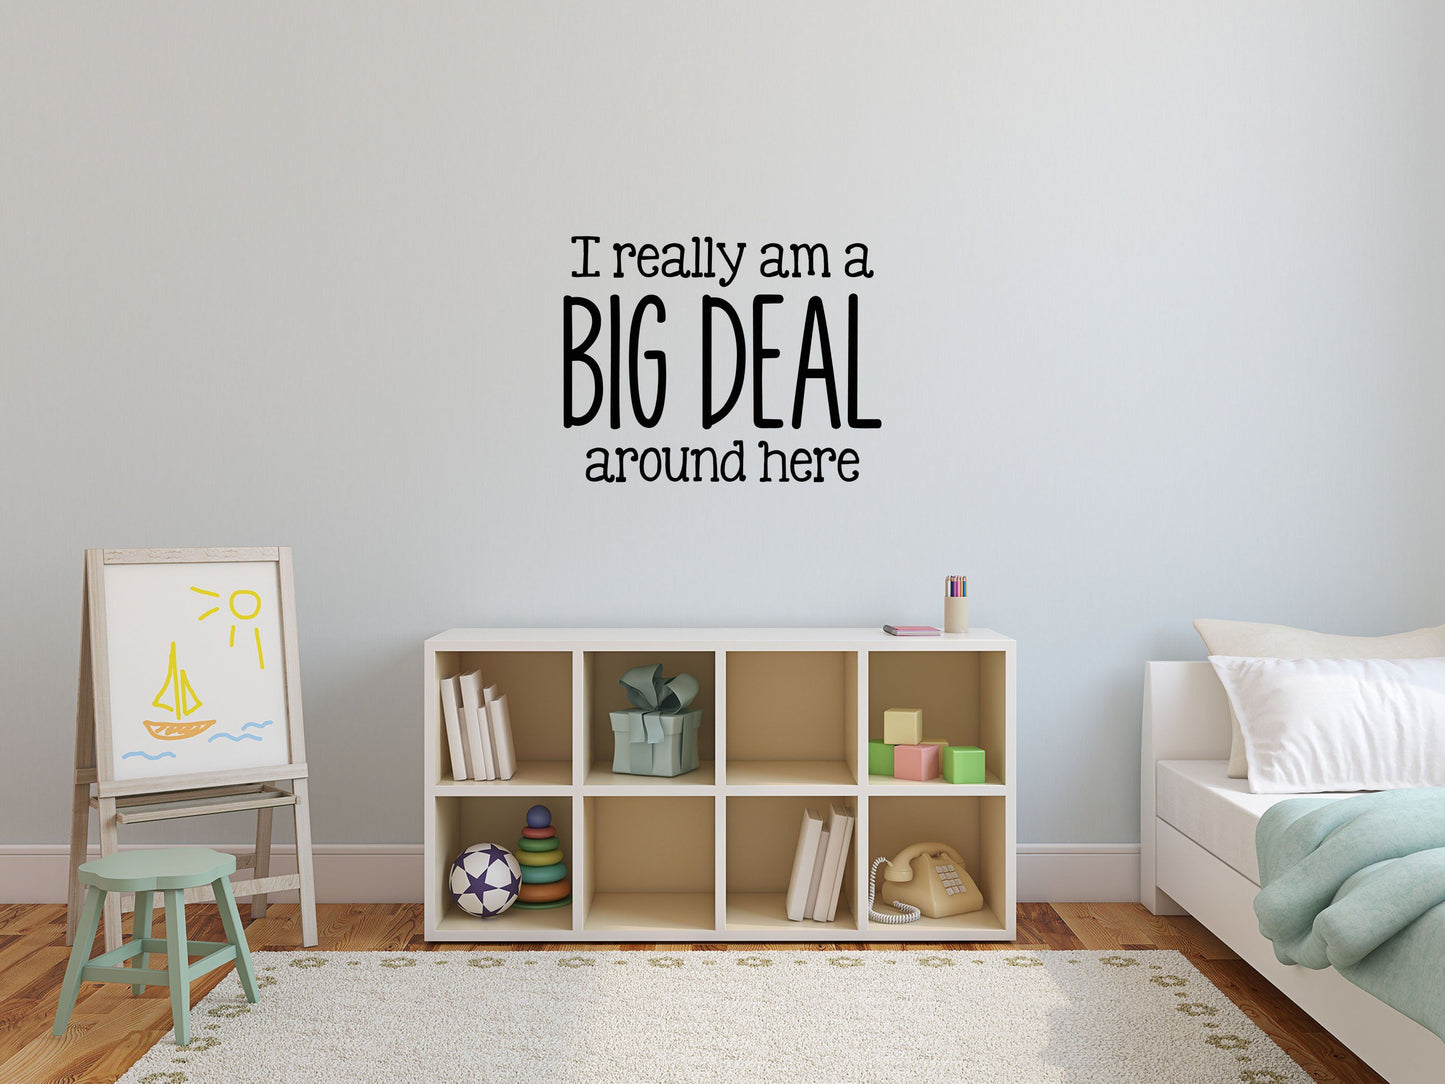 I Am A Big Deal Around Here - Inspirational Wall Decals Vinyl Wall Decal Inspirational Wall Signs 